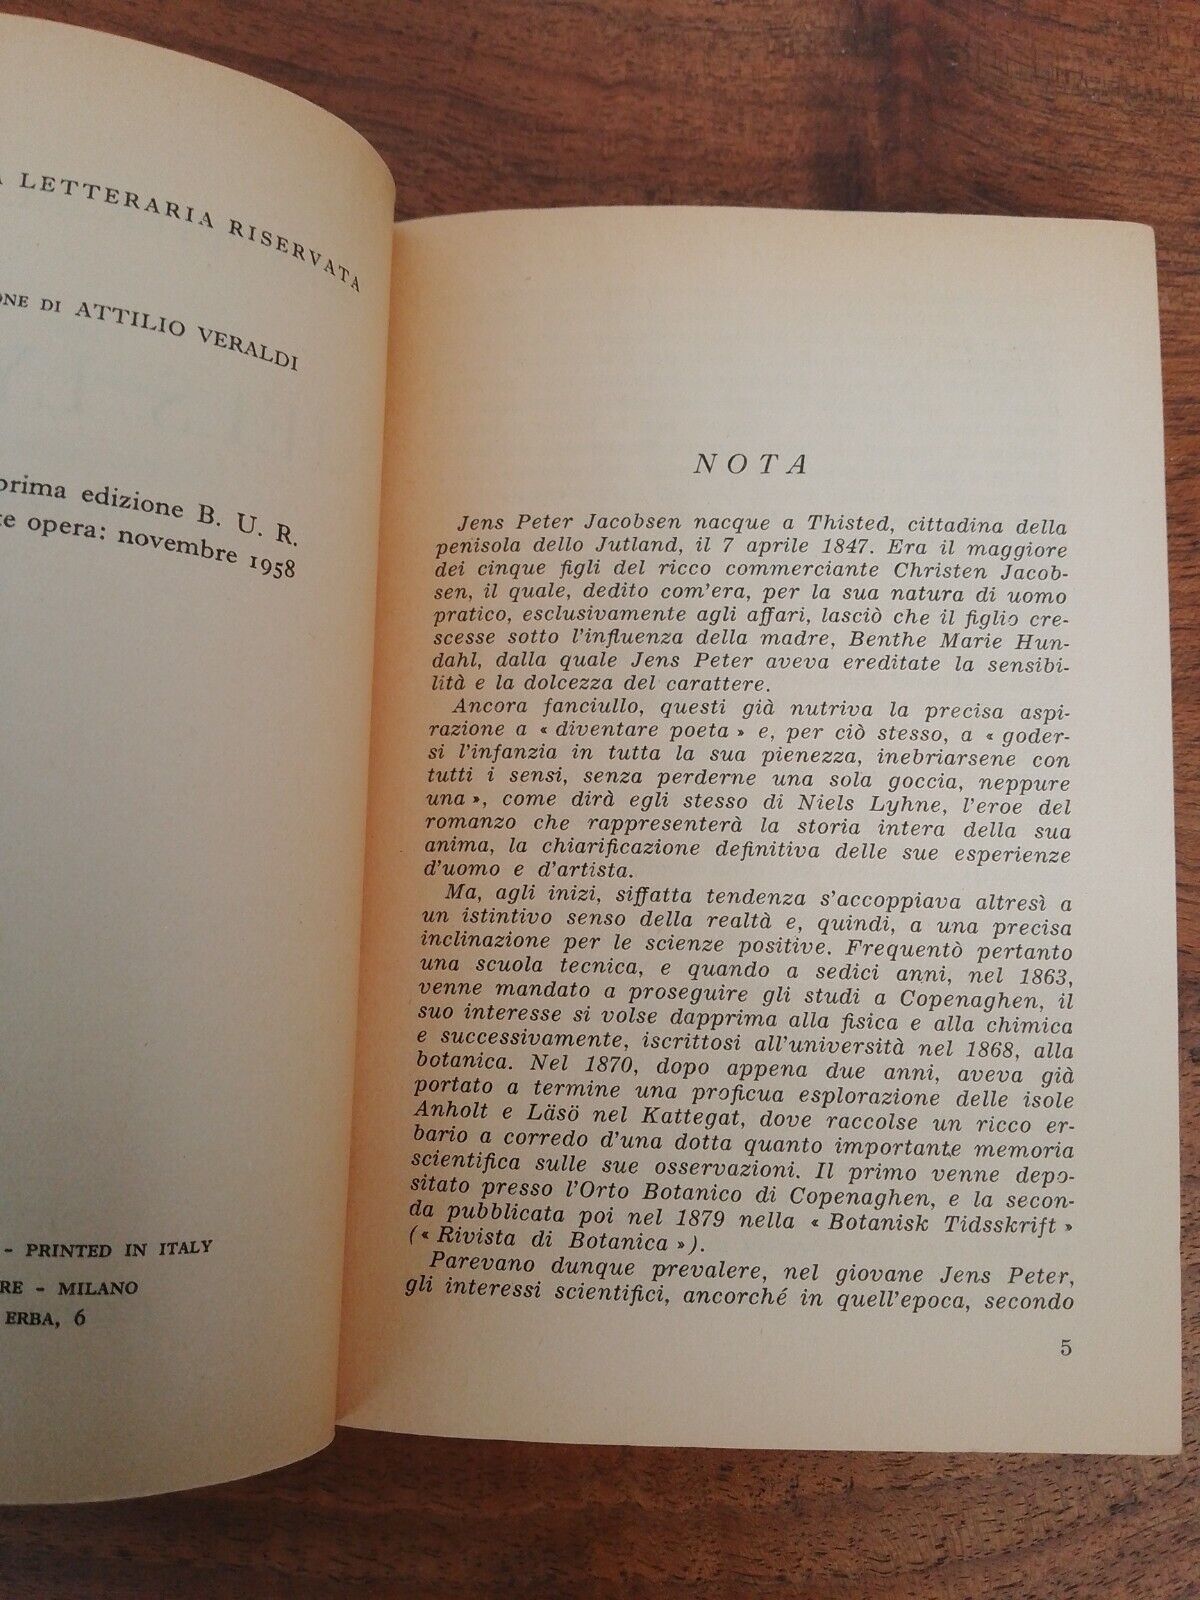 Niels Lyhne, di Jens Peter Jacobsen, BUR 1365 - 1367 Ed. Rizzoli 1958